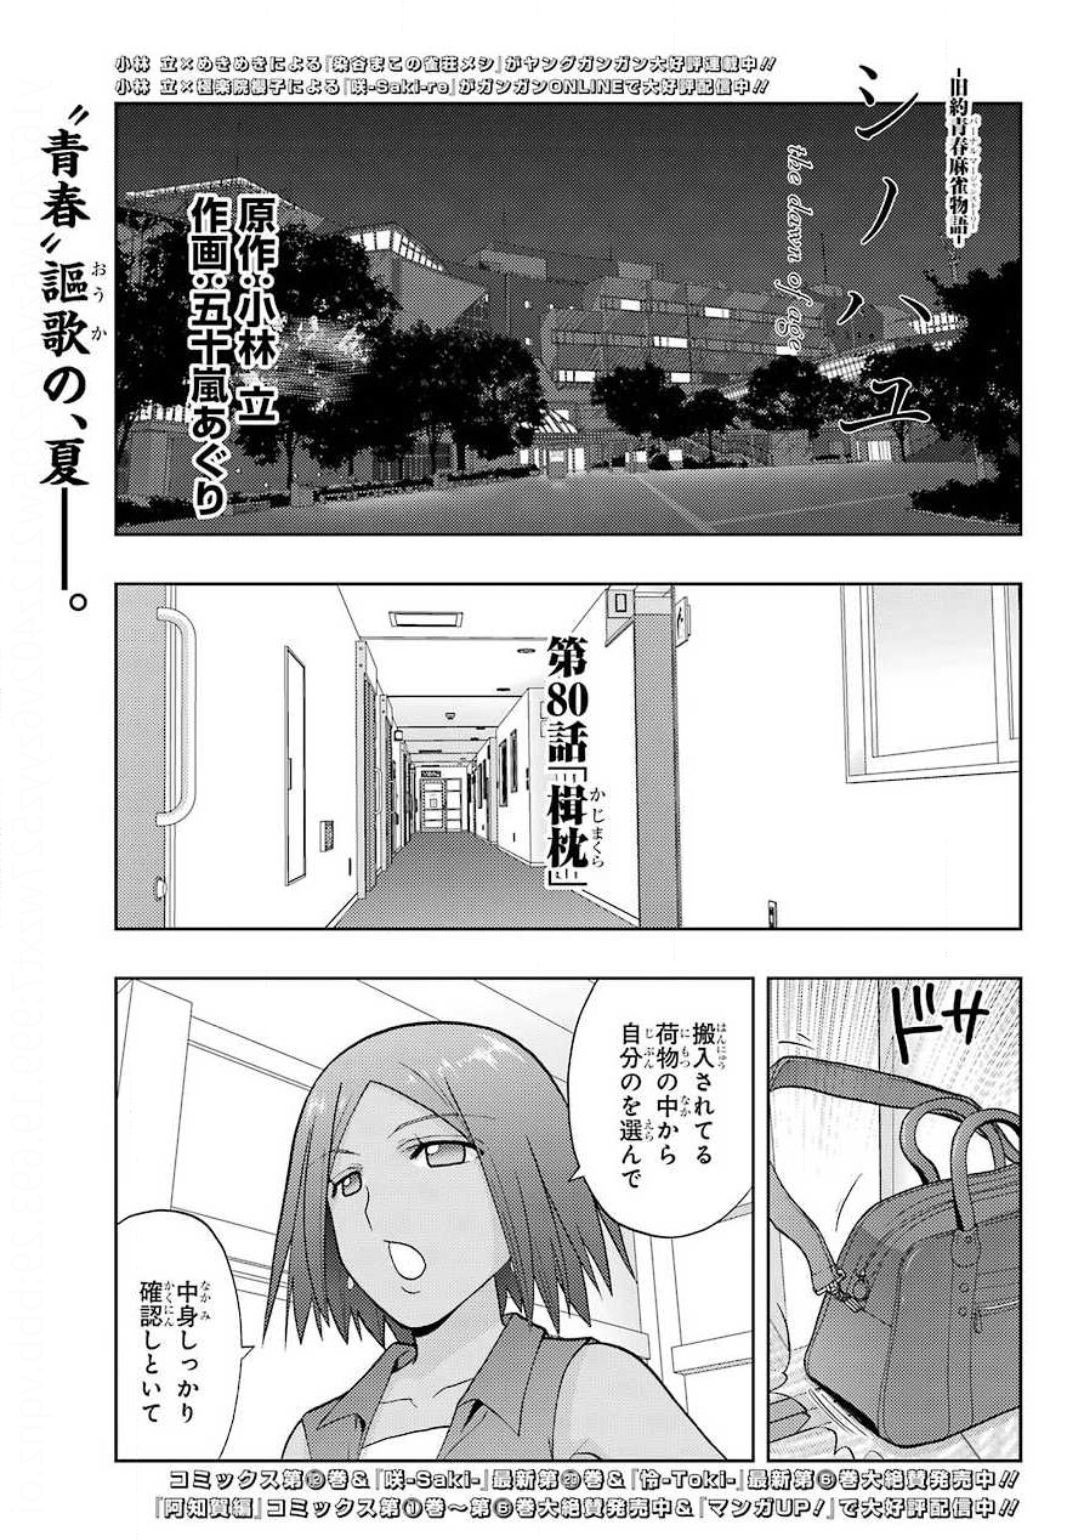 Shinohayu - The Dawn of Age Manga - Chapter 080 - Page 1